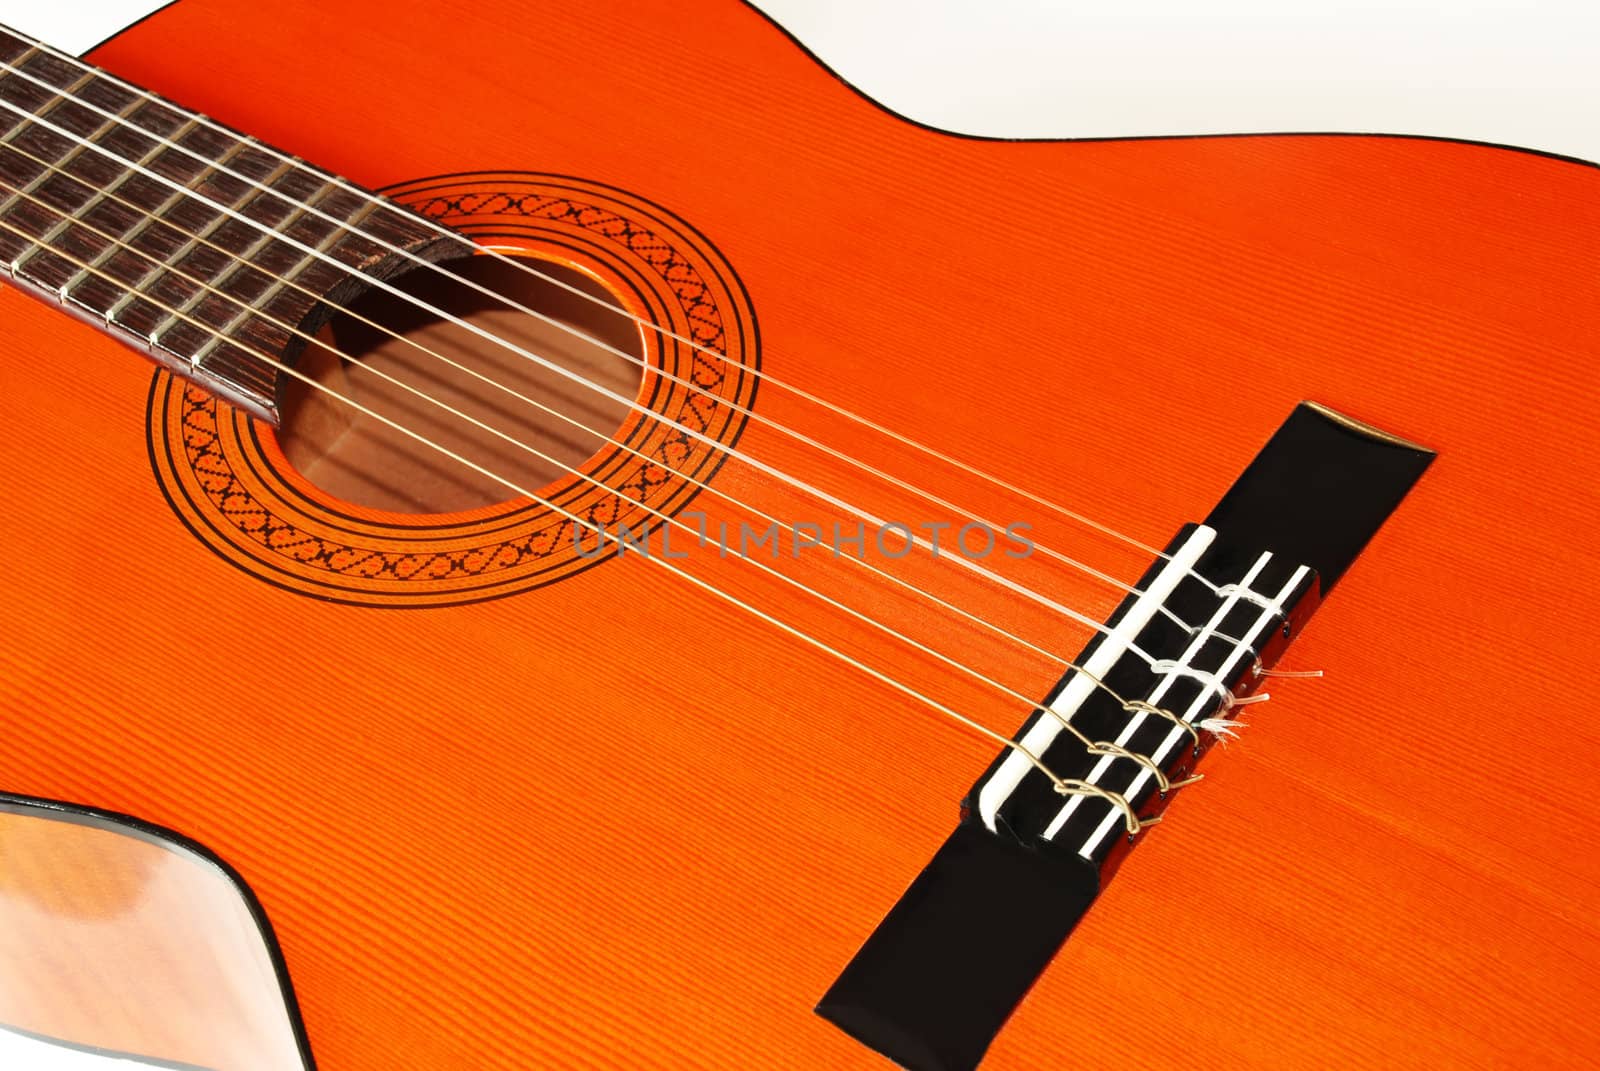 wooden orange acoustical guitar fragment over white